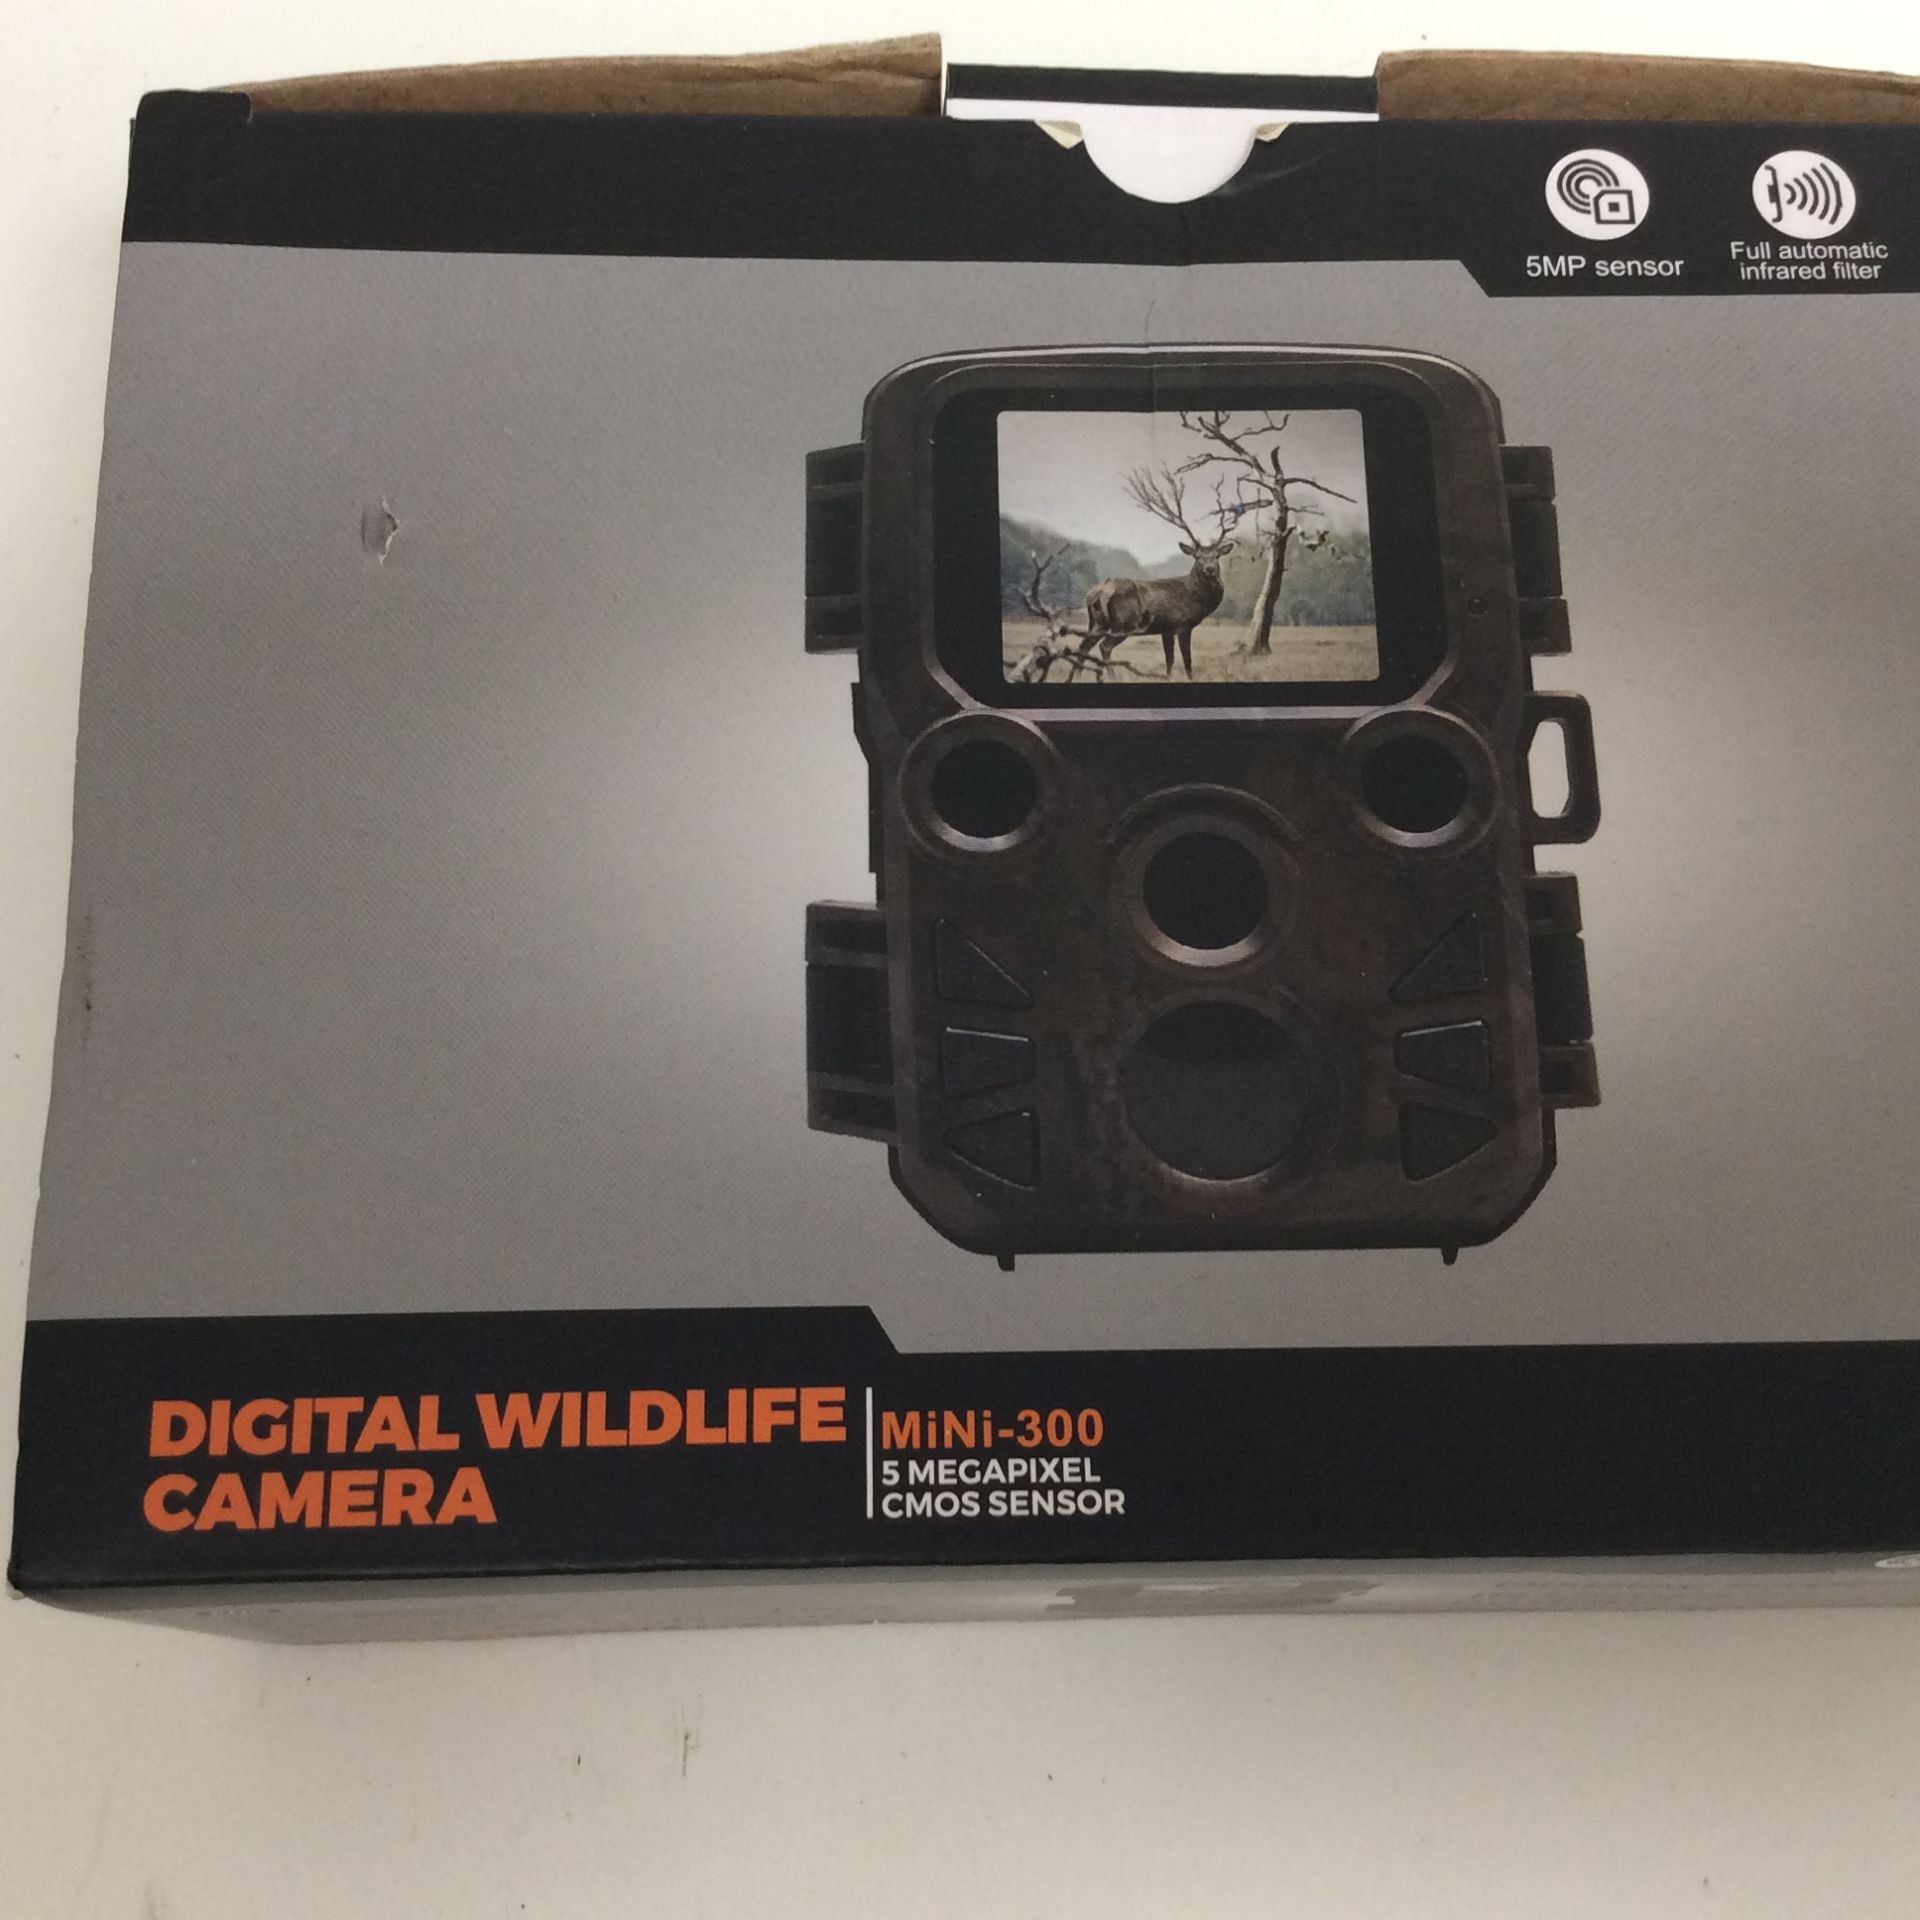 Digital wildlife camera mini -300 with cmos sensor - Image 2 of 3